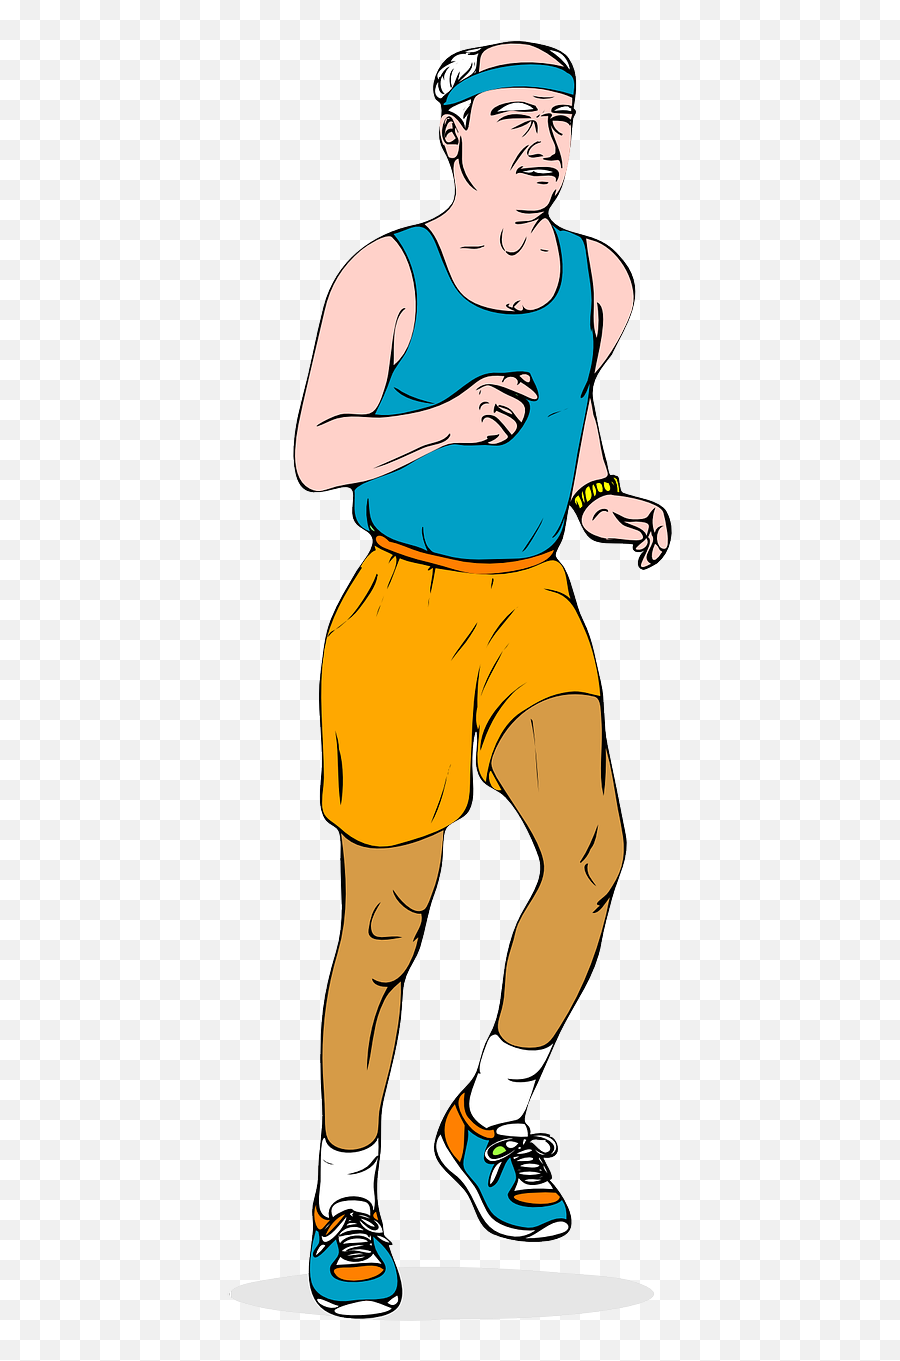 Jogger Jogging Man - Free Vector Graphic On Pixabay Old Man Running Clip Art Png Emoji,Person Running Png